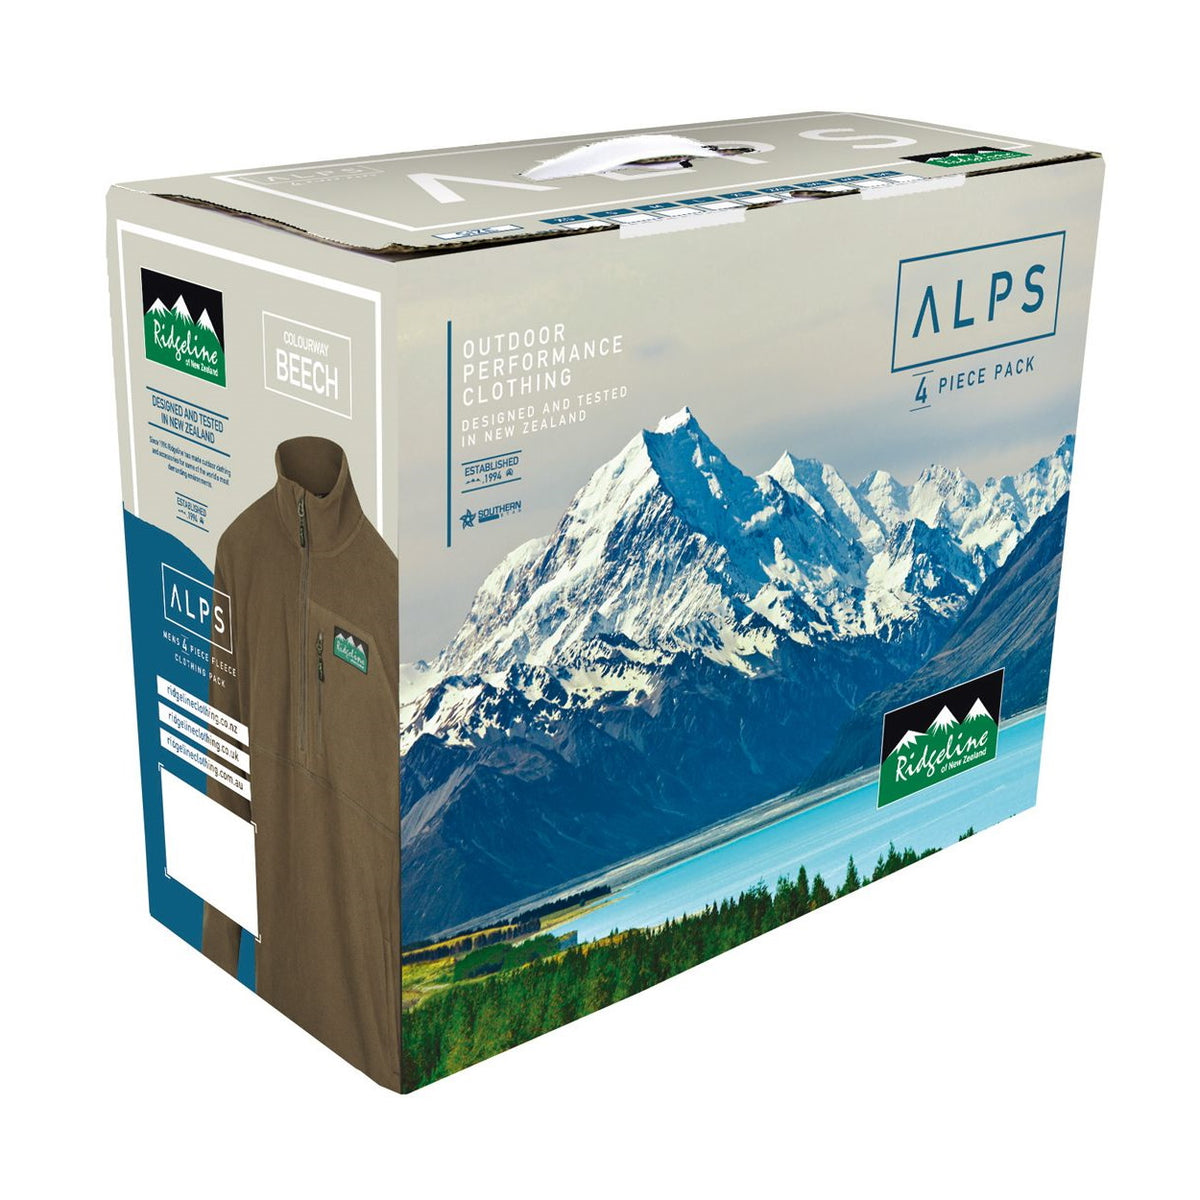 Ridgeline Alps Fleece Pack Box